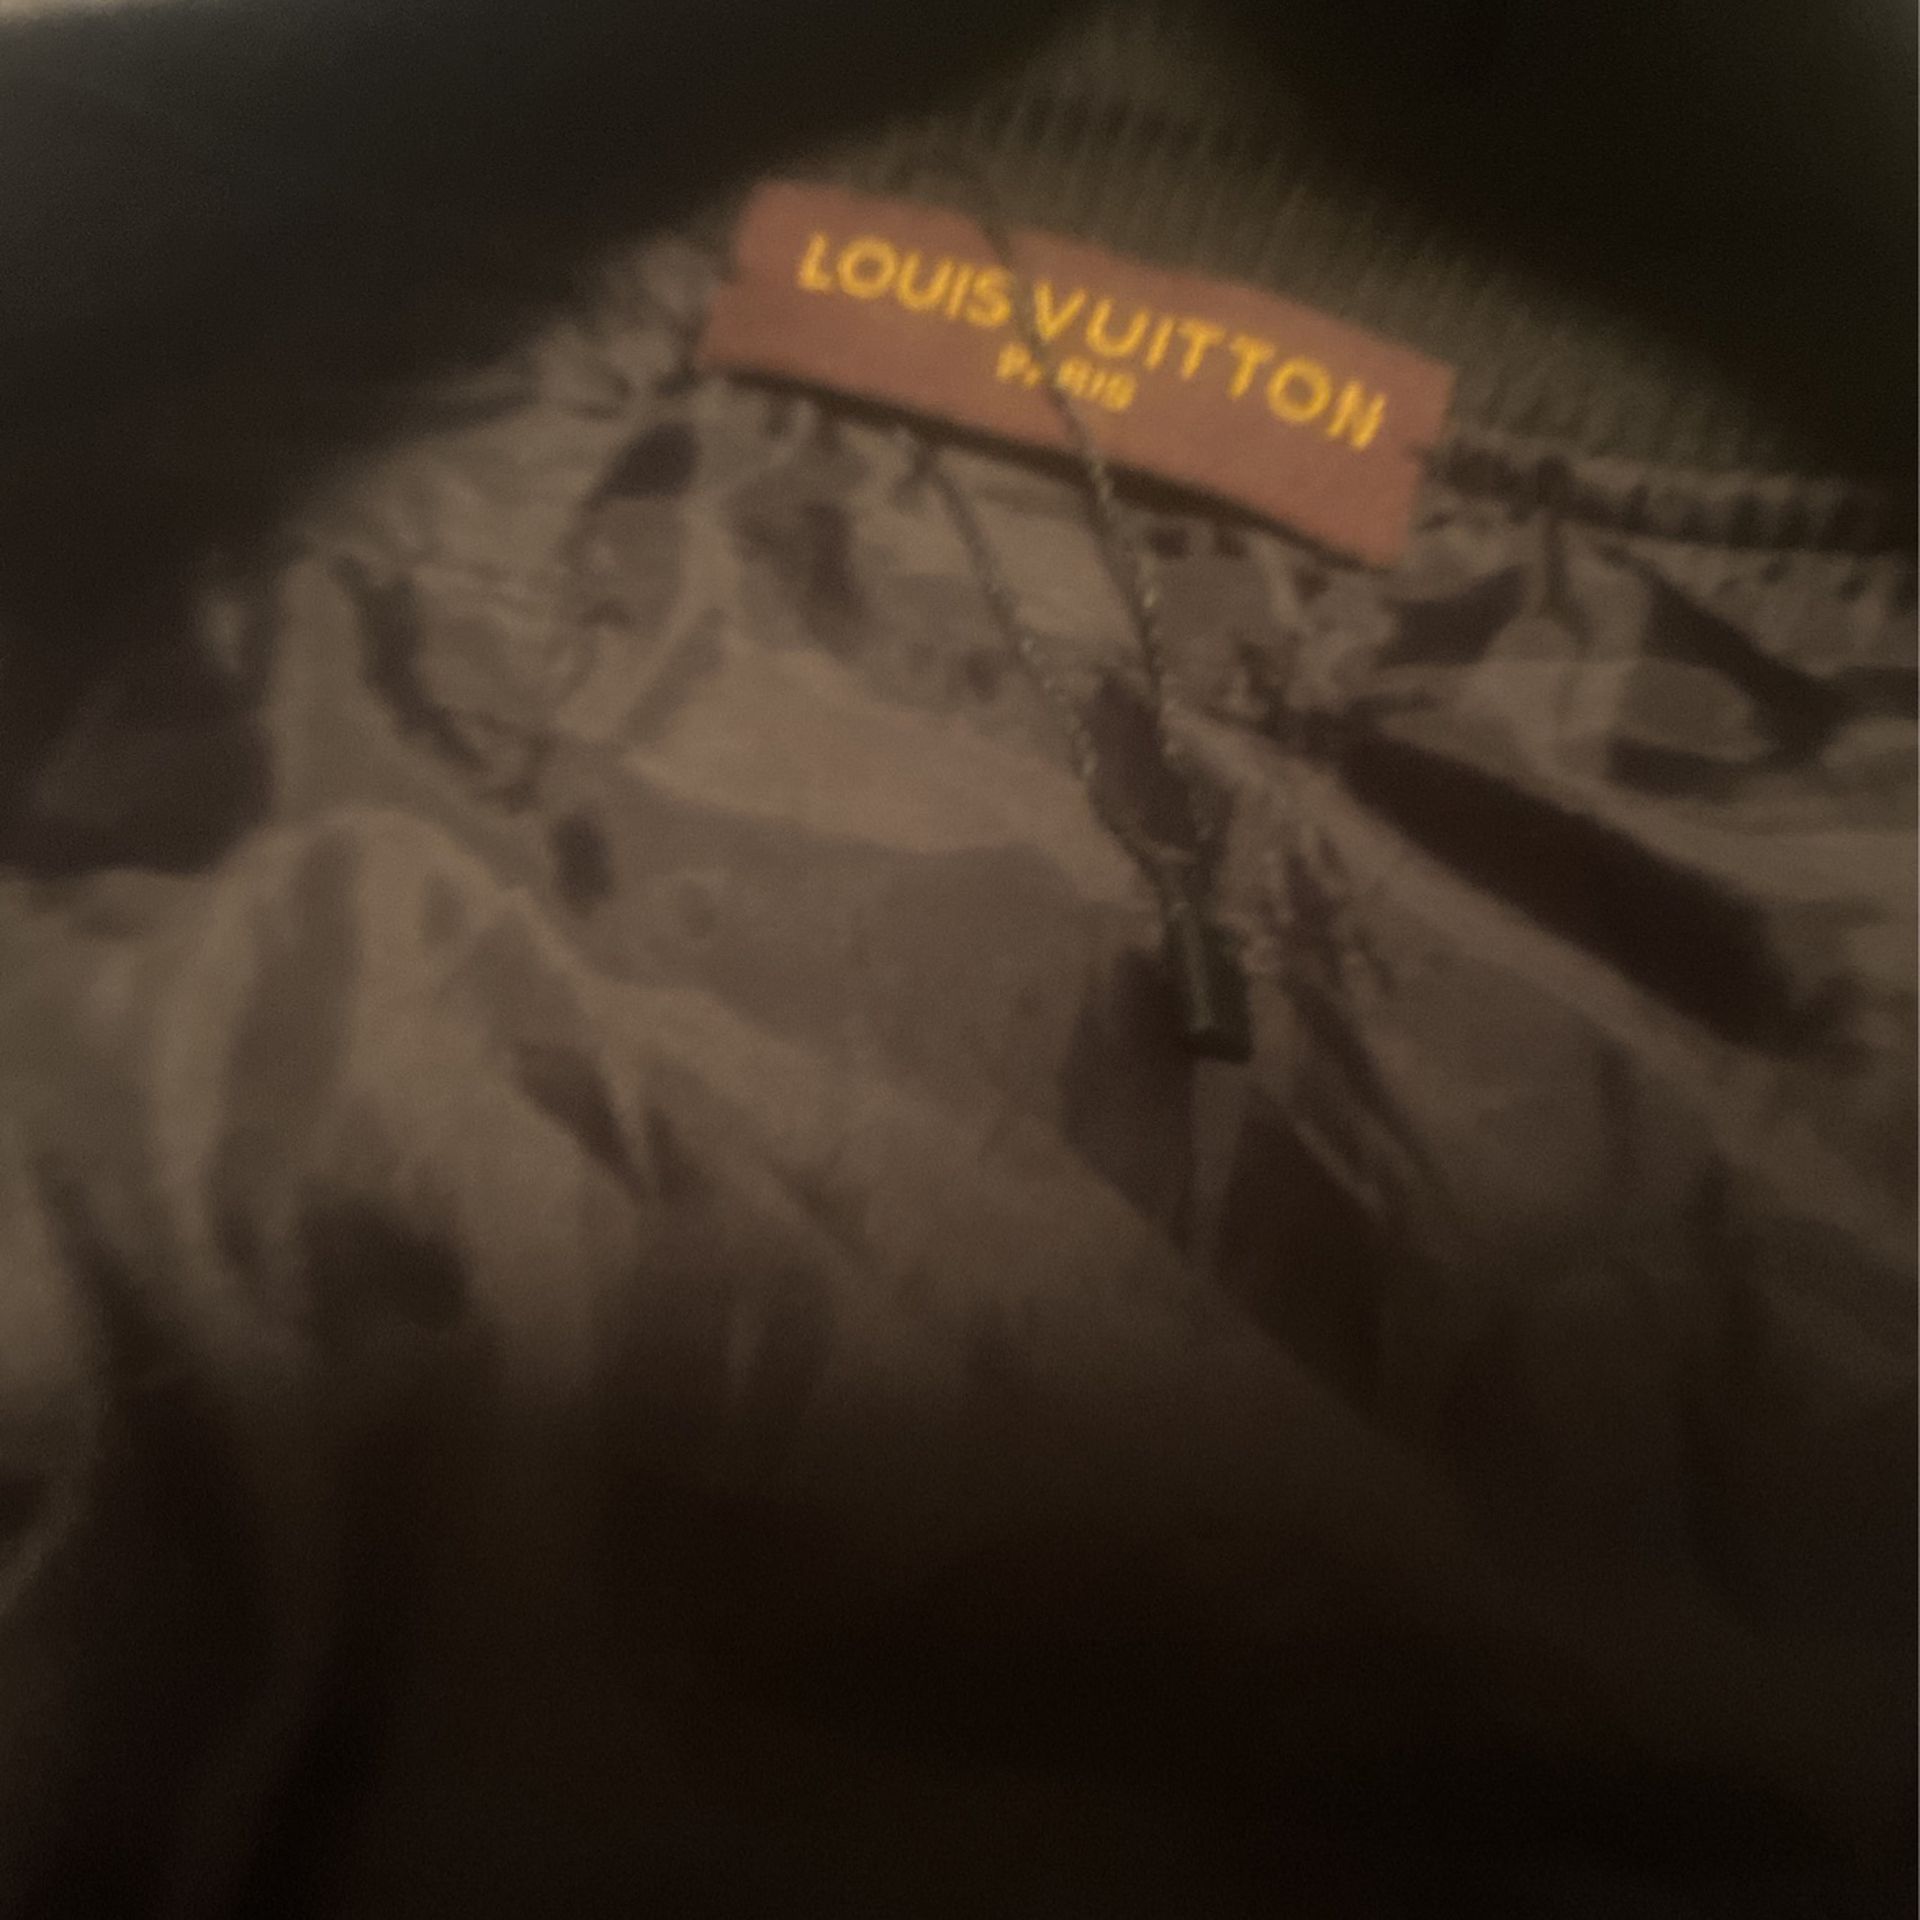 Louis Vuitton Varsity jacket for Sale in Augusta, GA - OfferUp